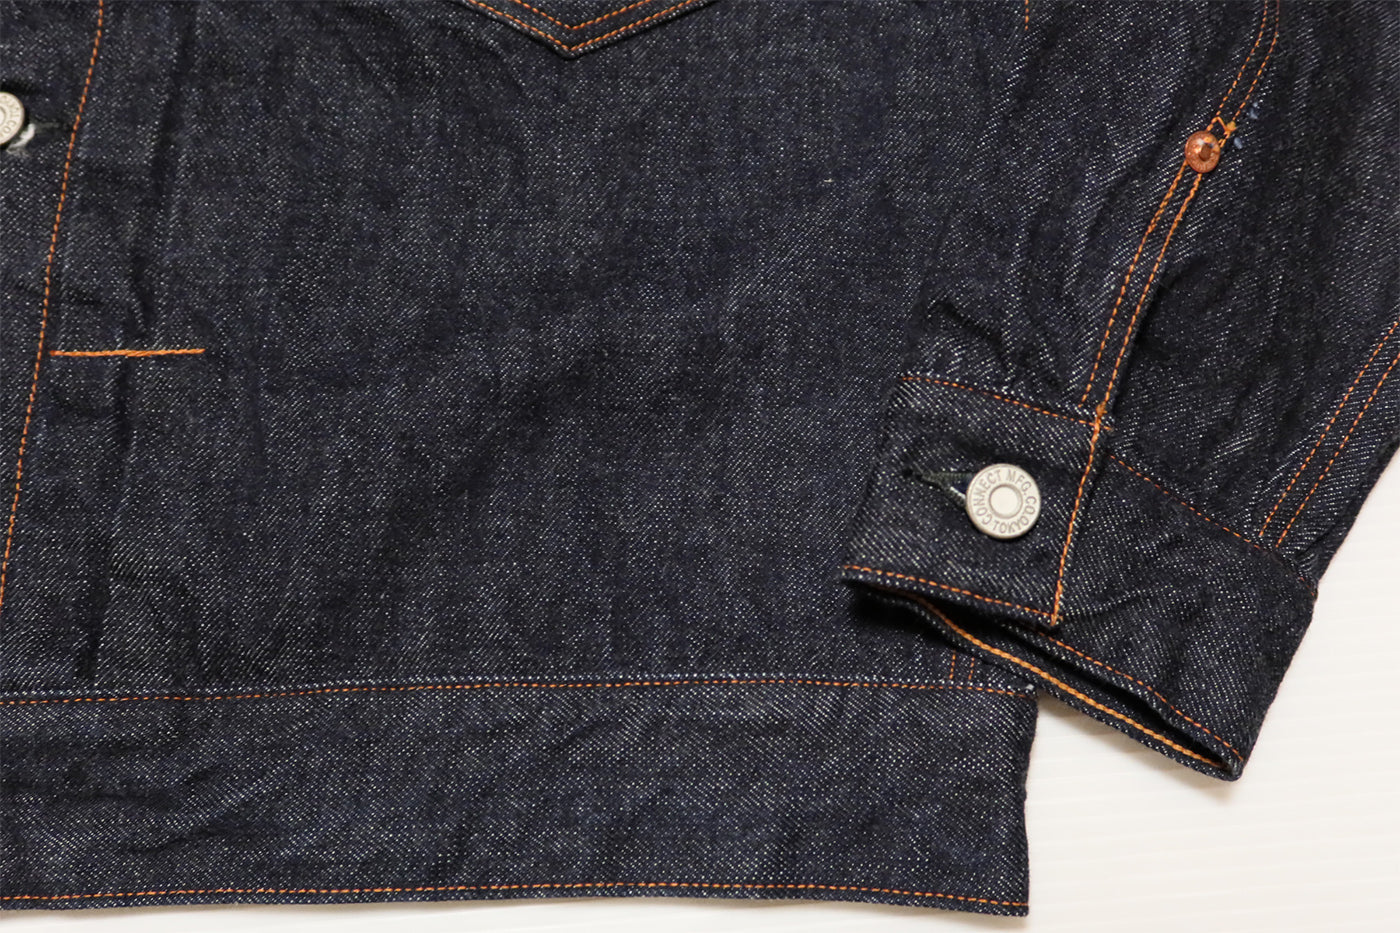 Pherrow's Denim Jacket 510SW 13.5oz. Men's Denim Blouse Jeans Made in Japan